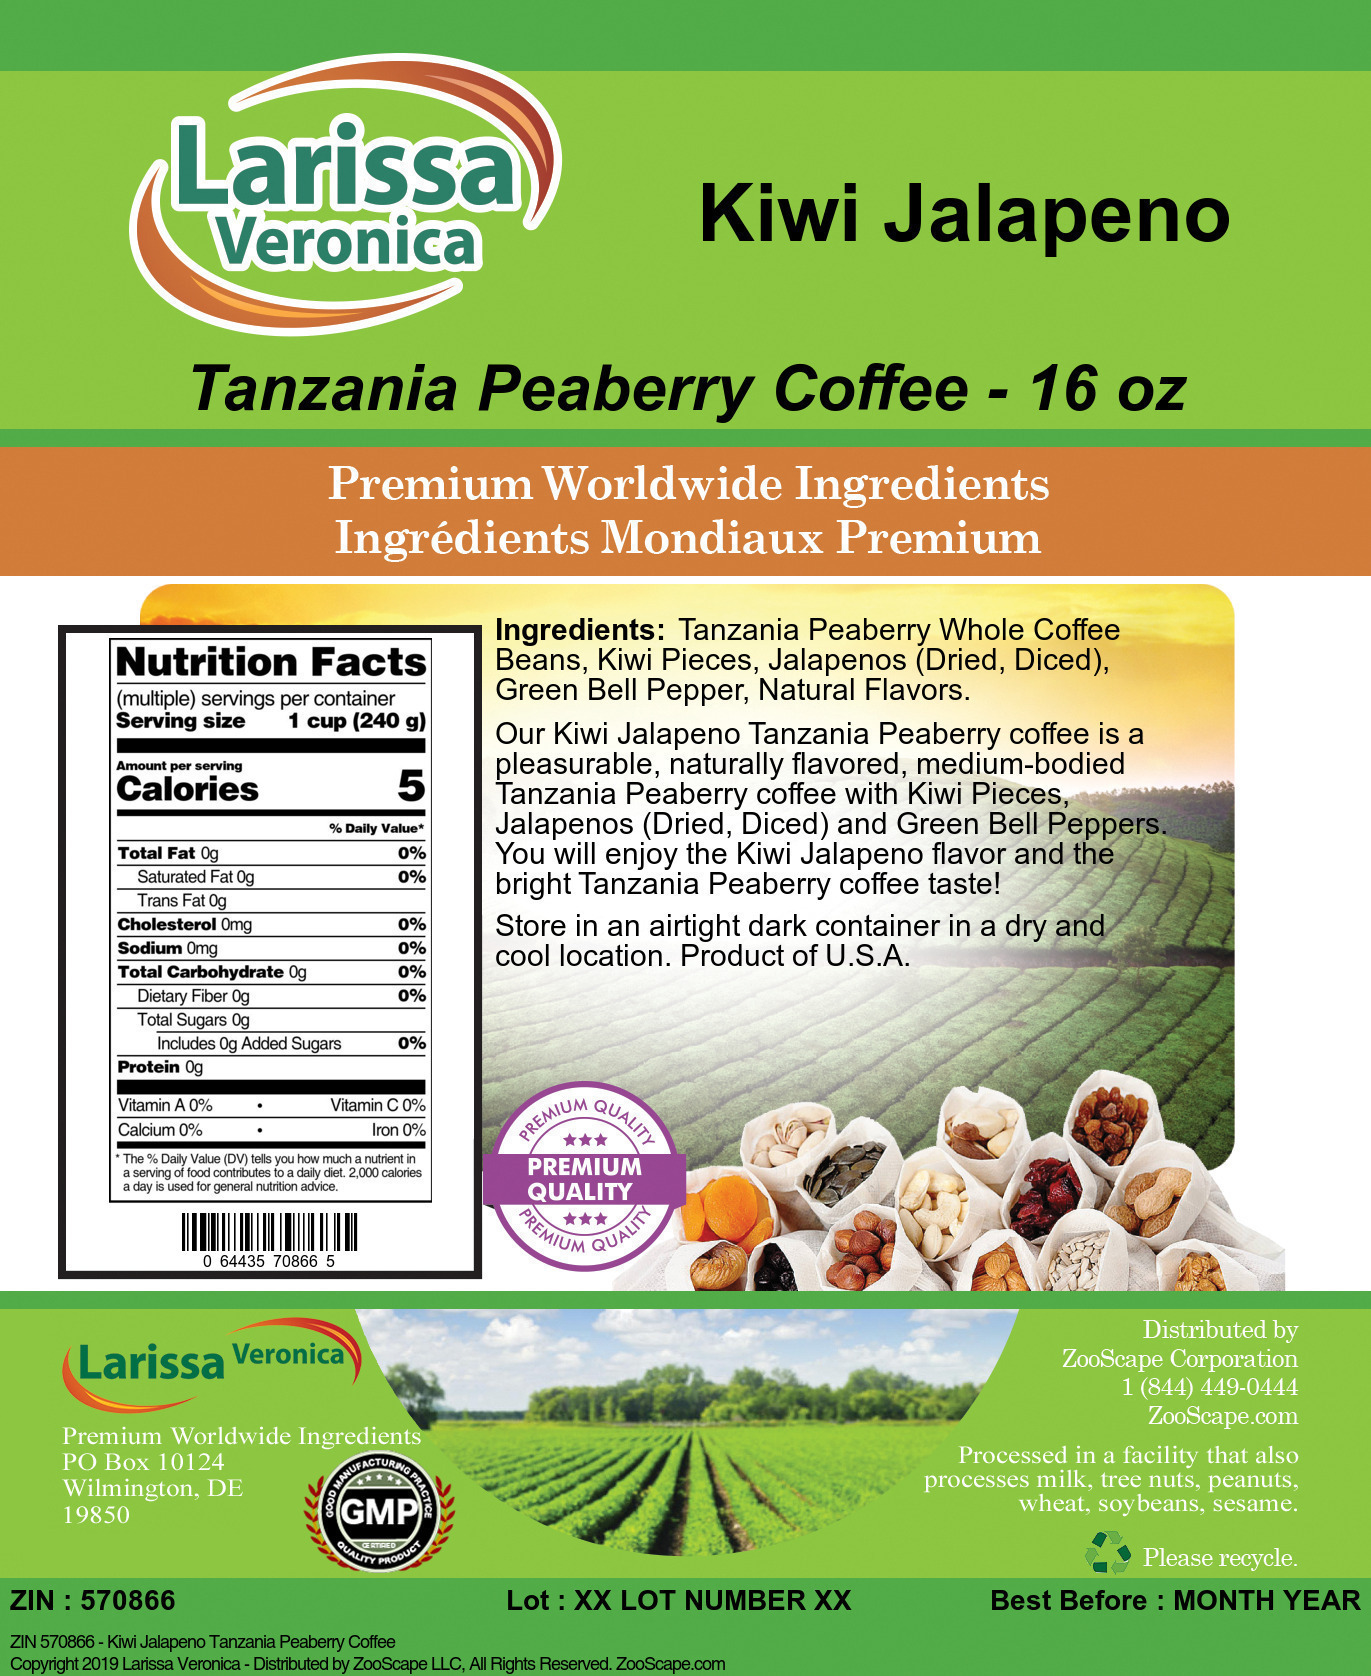 Kiwi Jalapeno Tanzania Peaberry Coffee - Label